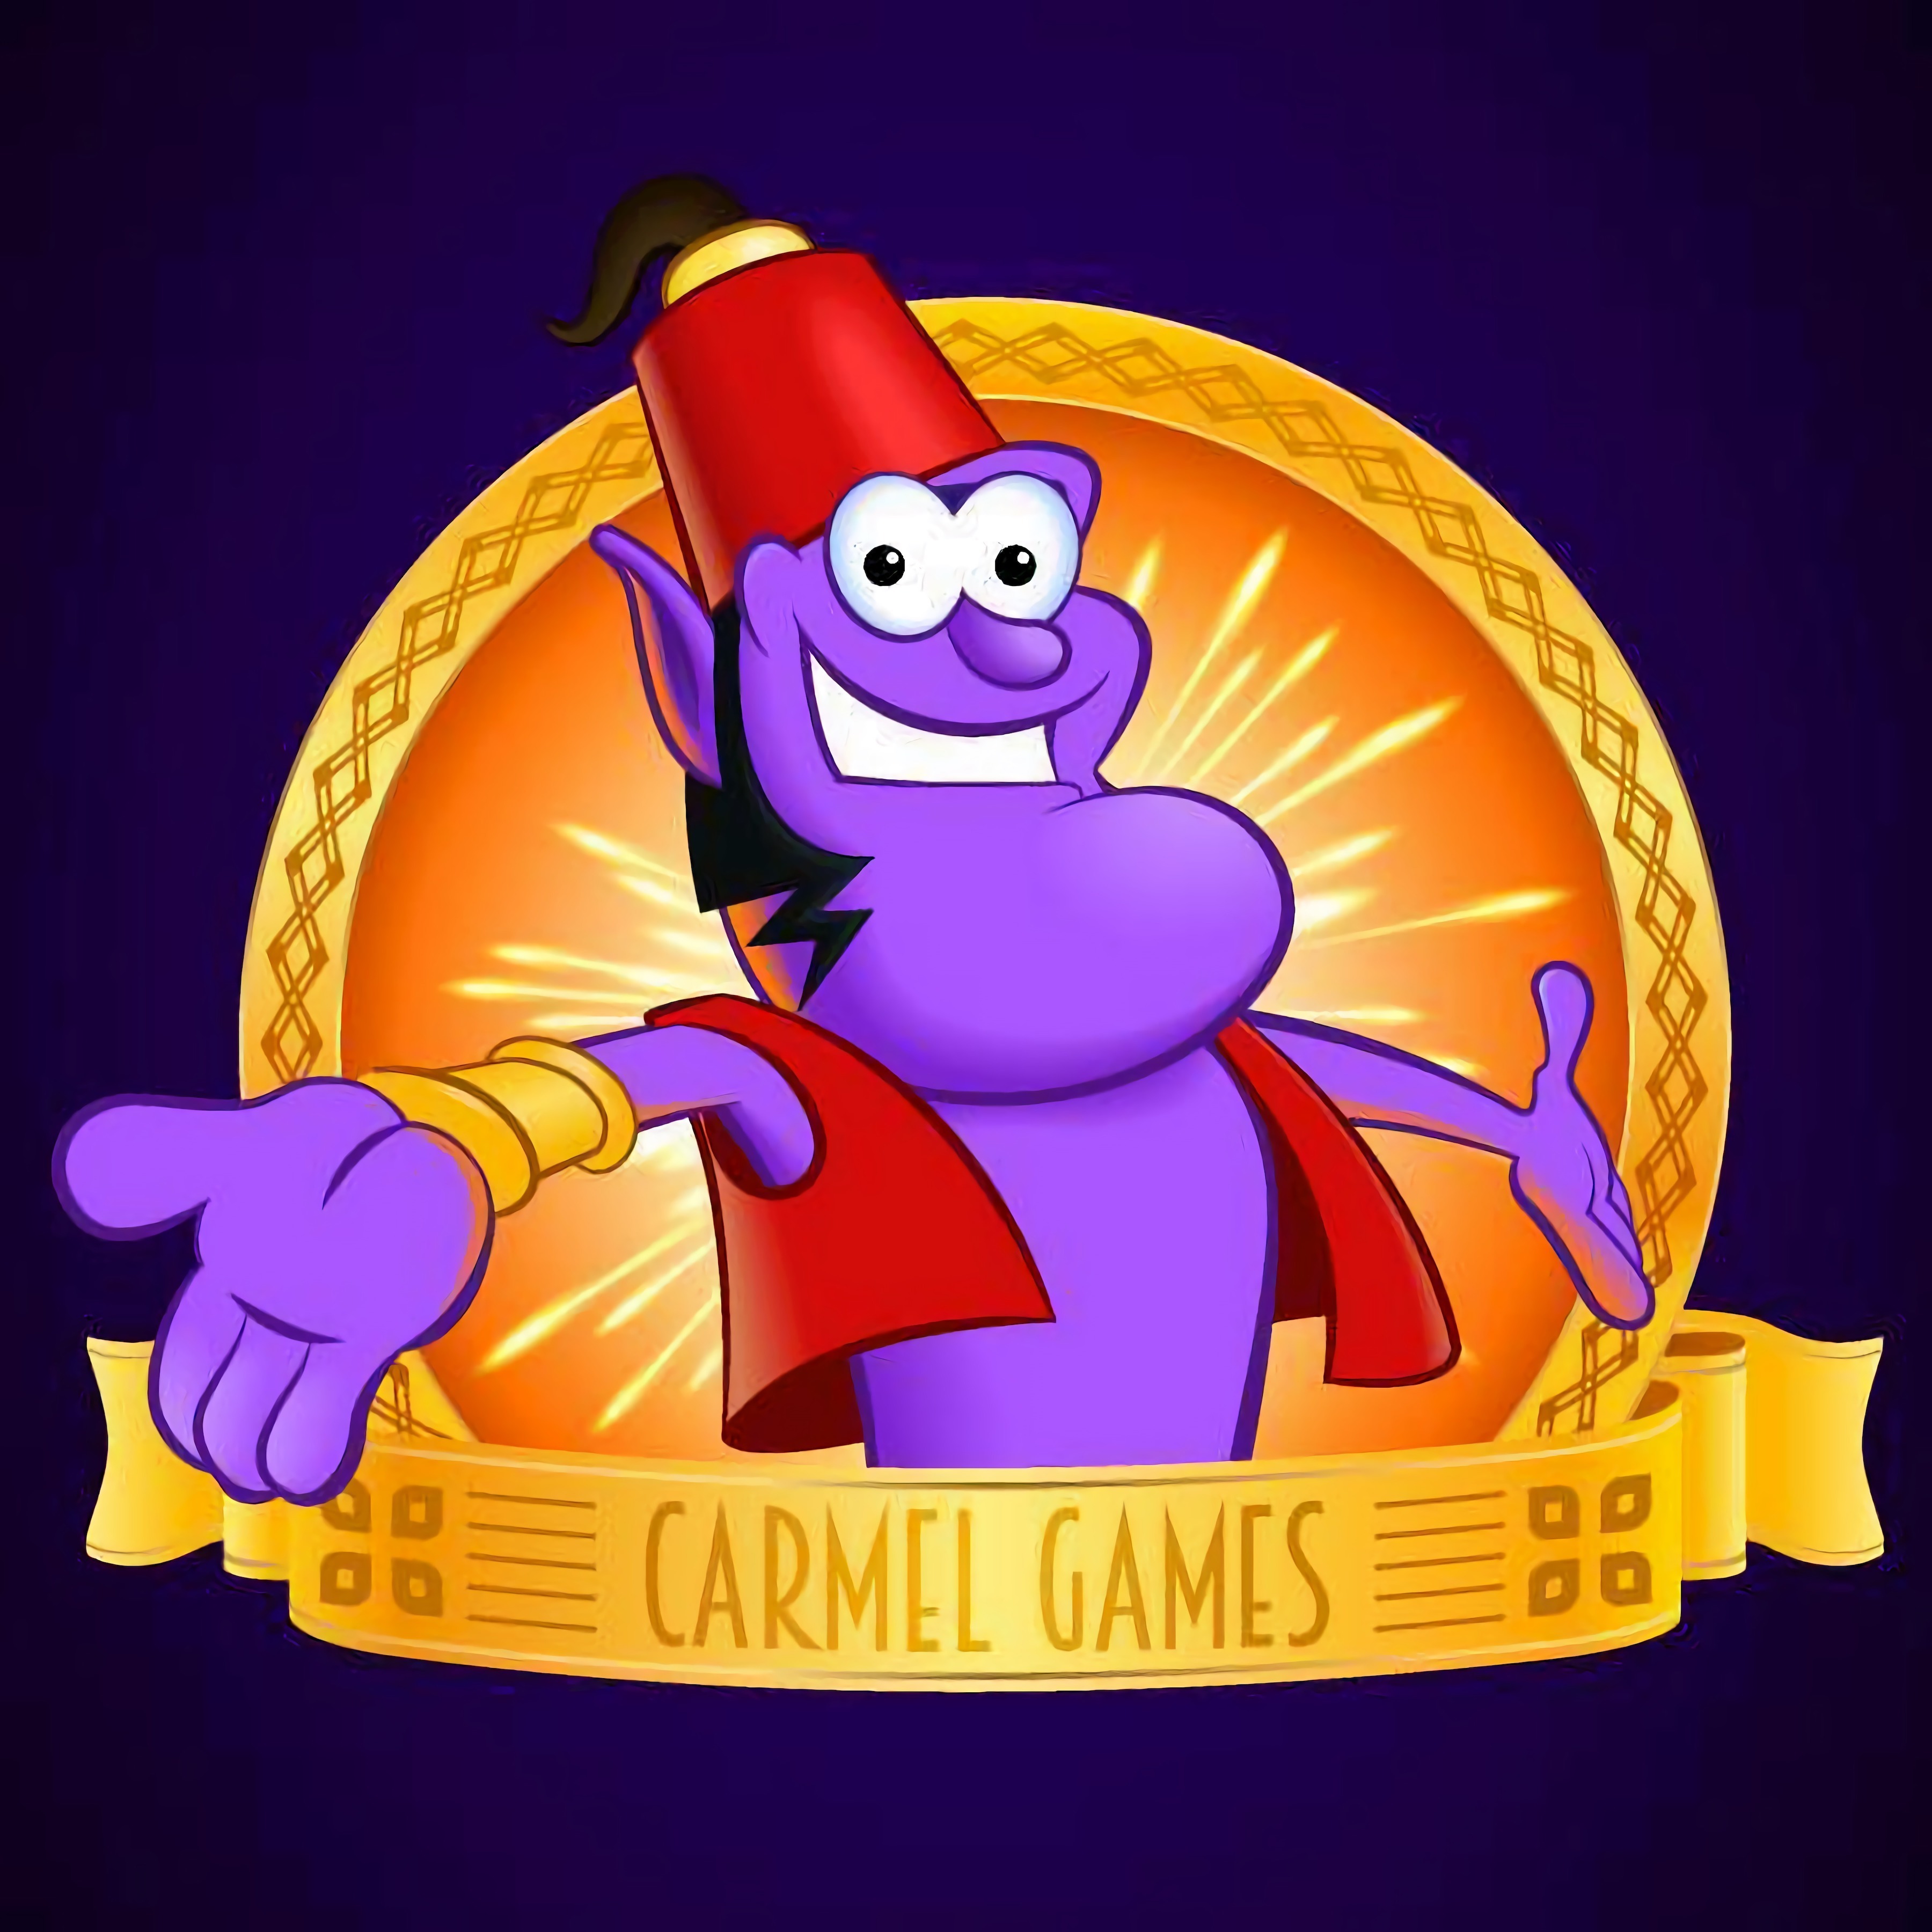 Carmel Games